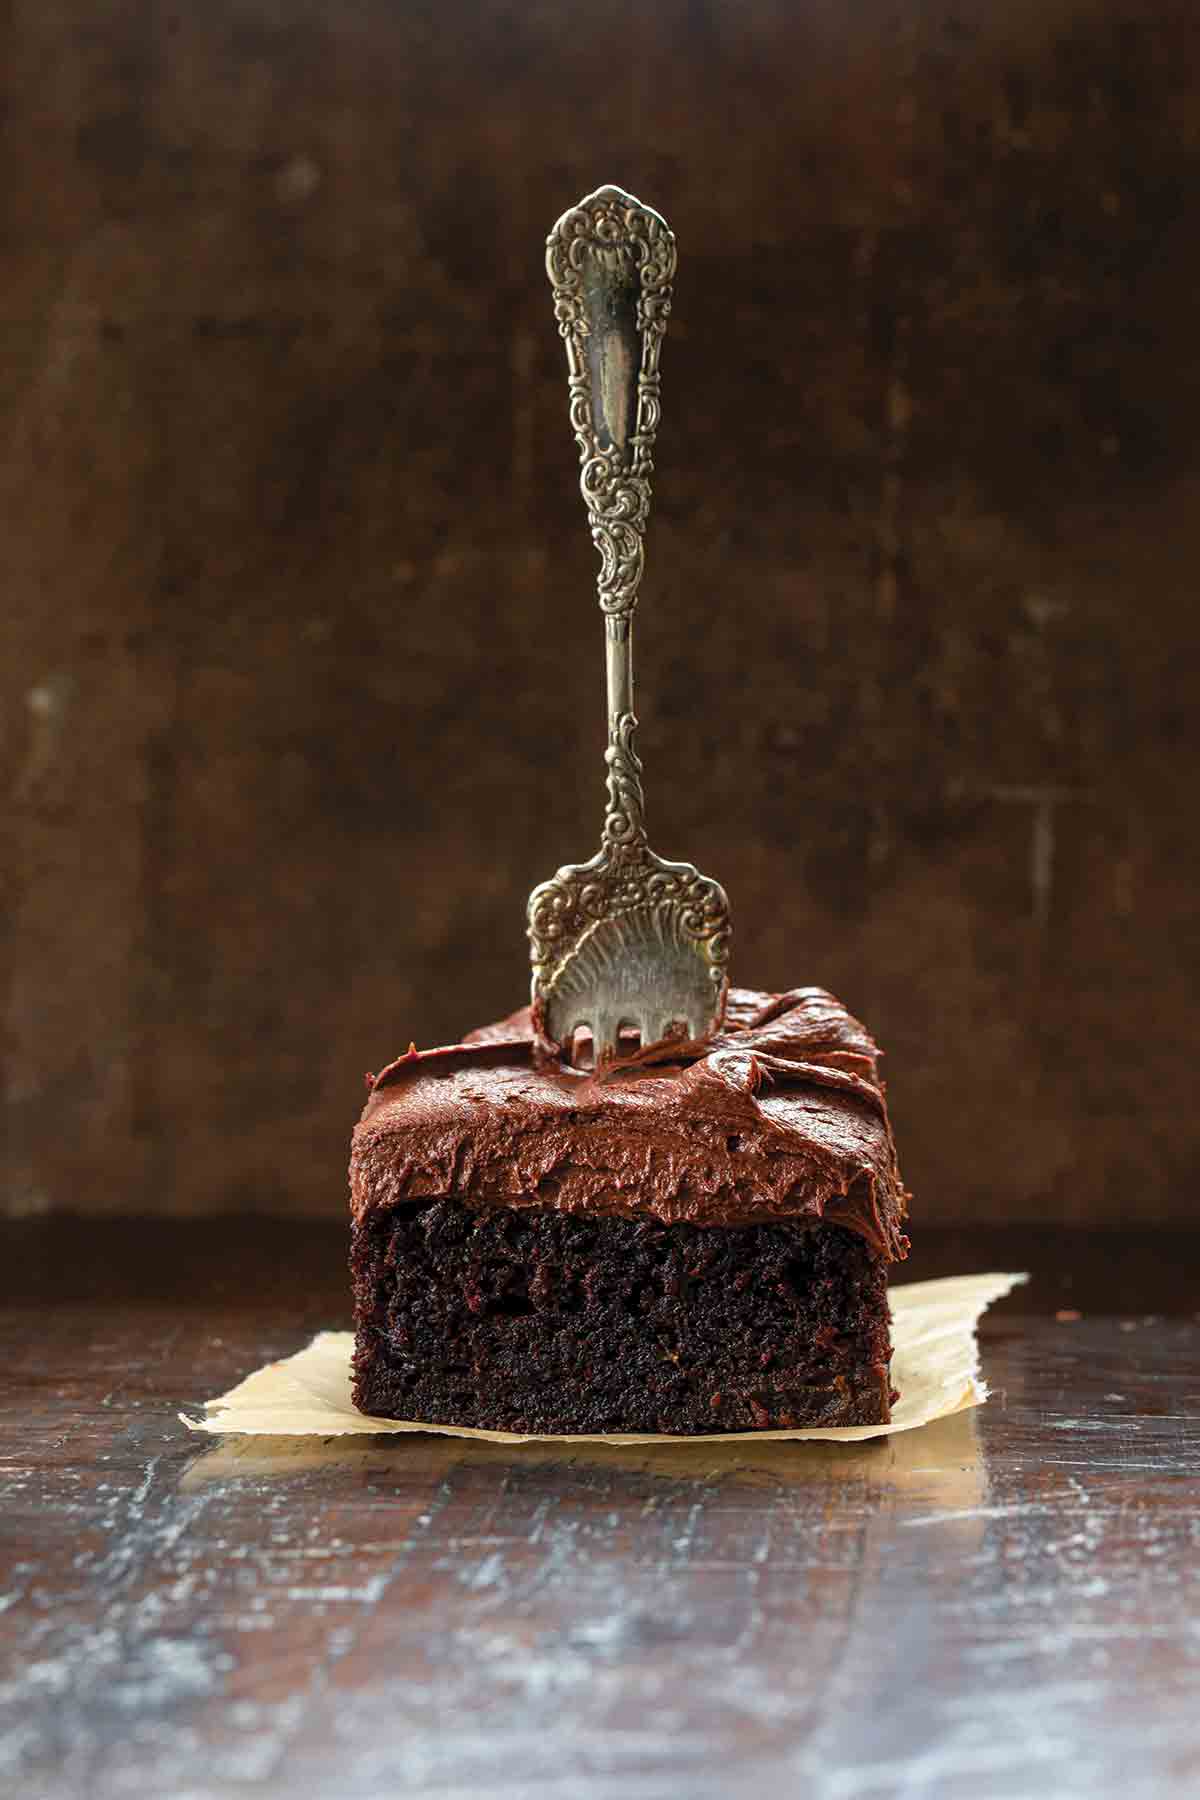 Kue Square of Chocolate Zucchini dengan frosting buttercream di atas kotak perkamen dengan garpu diletakkan di tengah kue.